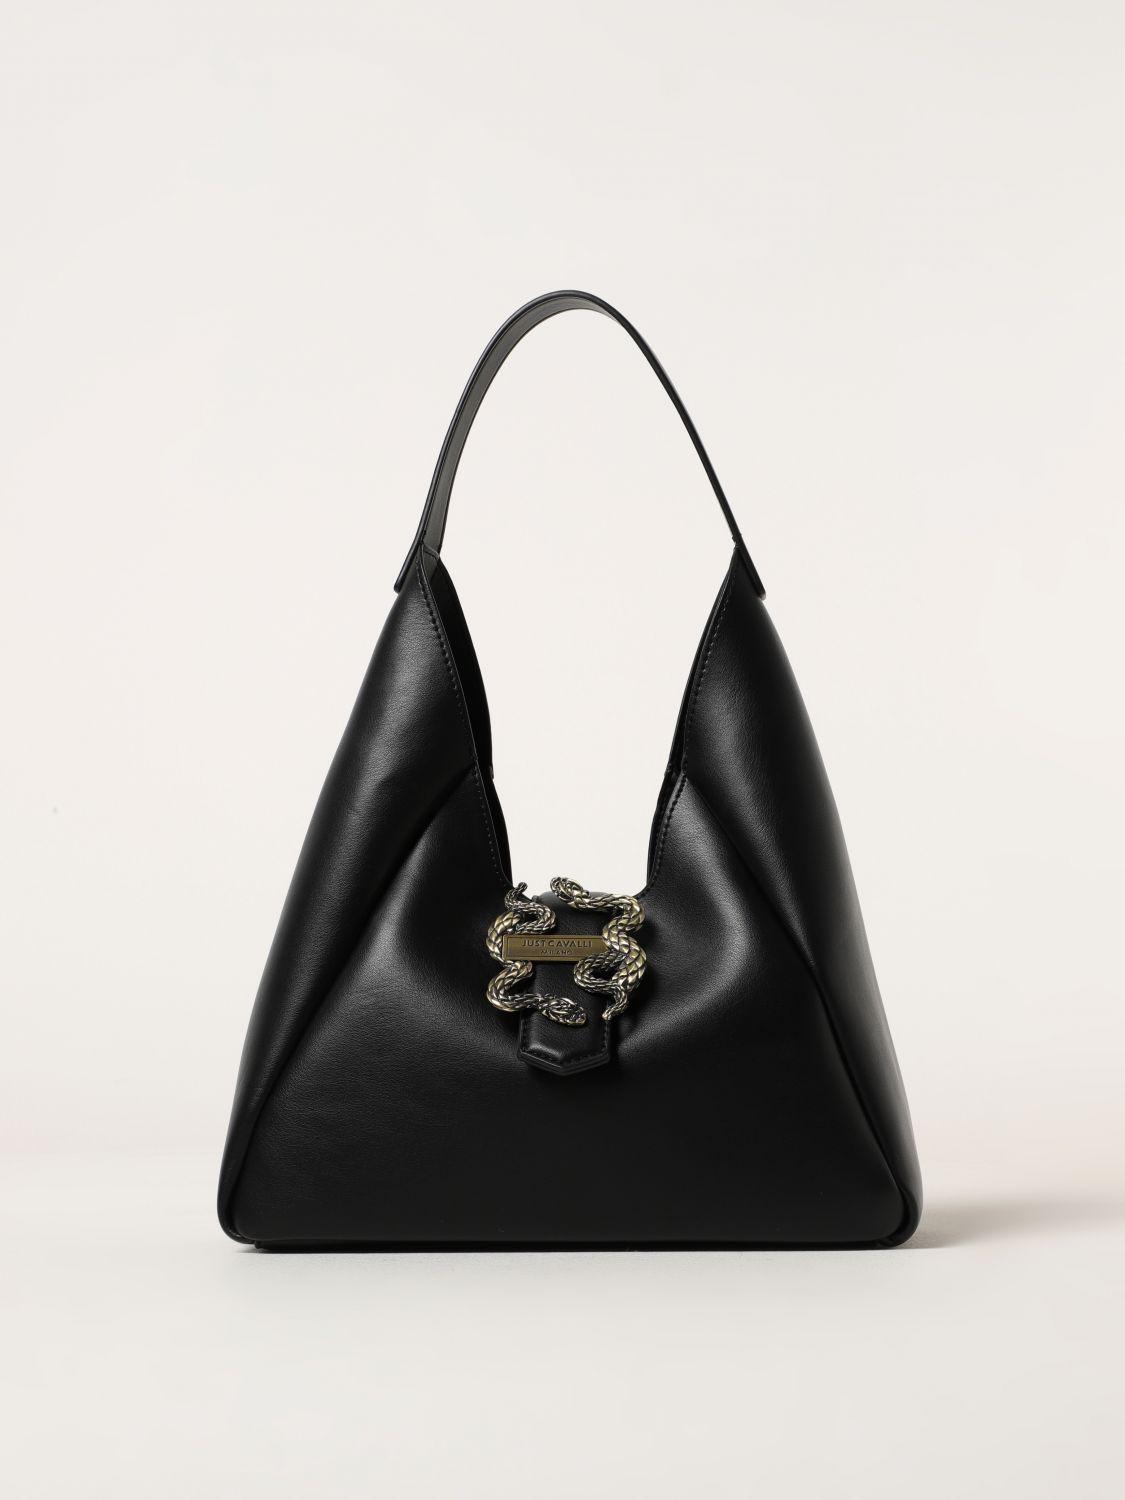 JUST CAVALLI: Handbag woman - Black